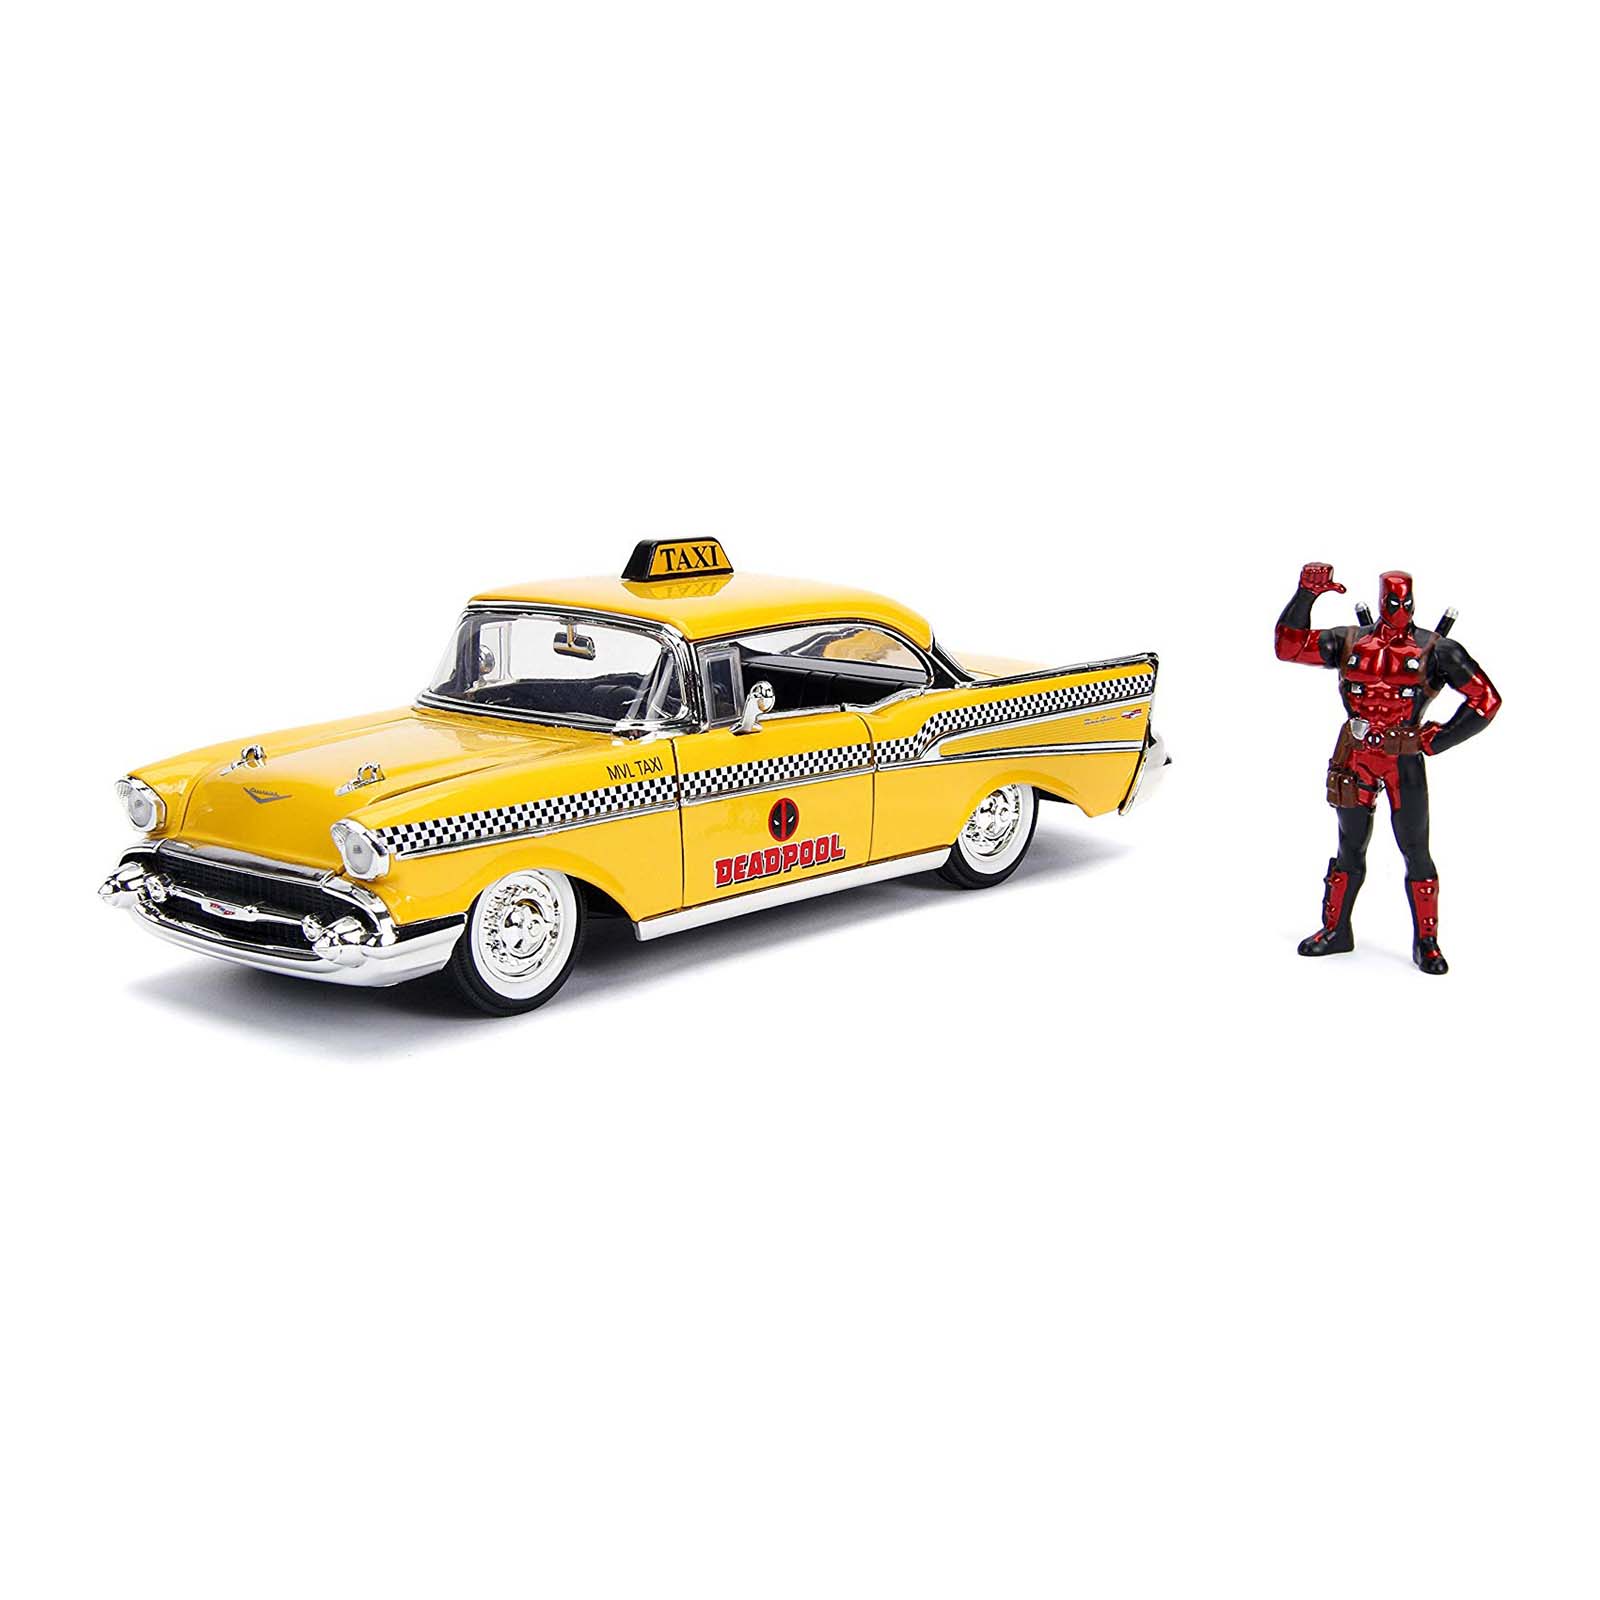 Jada JAD30290-1/24 "Hollywood Rides" Deadpool 1957 Chevy Bel Air Taxi